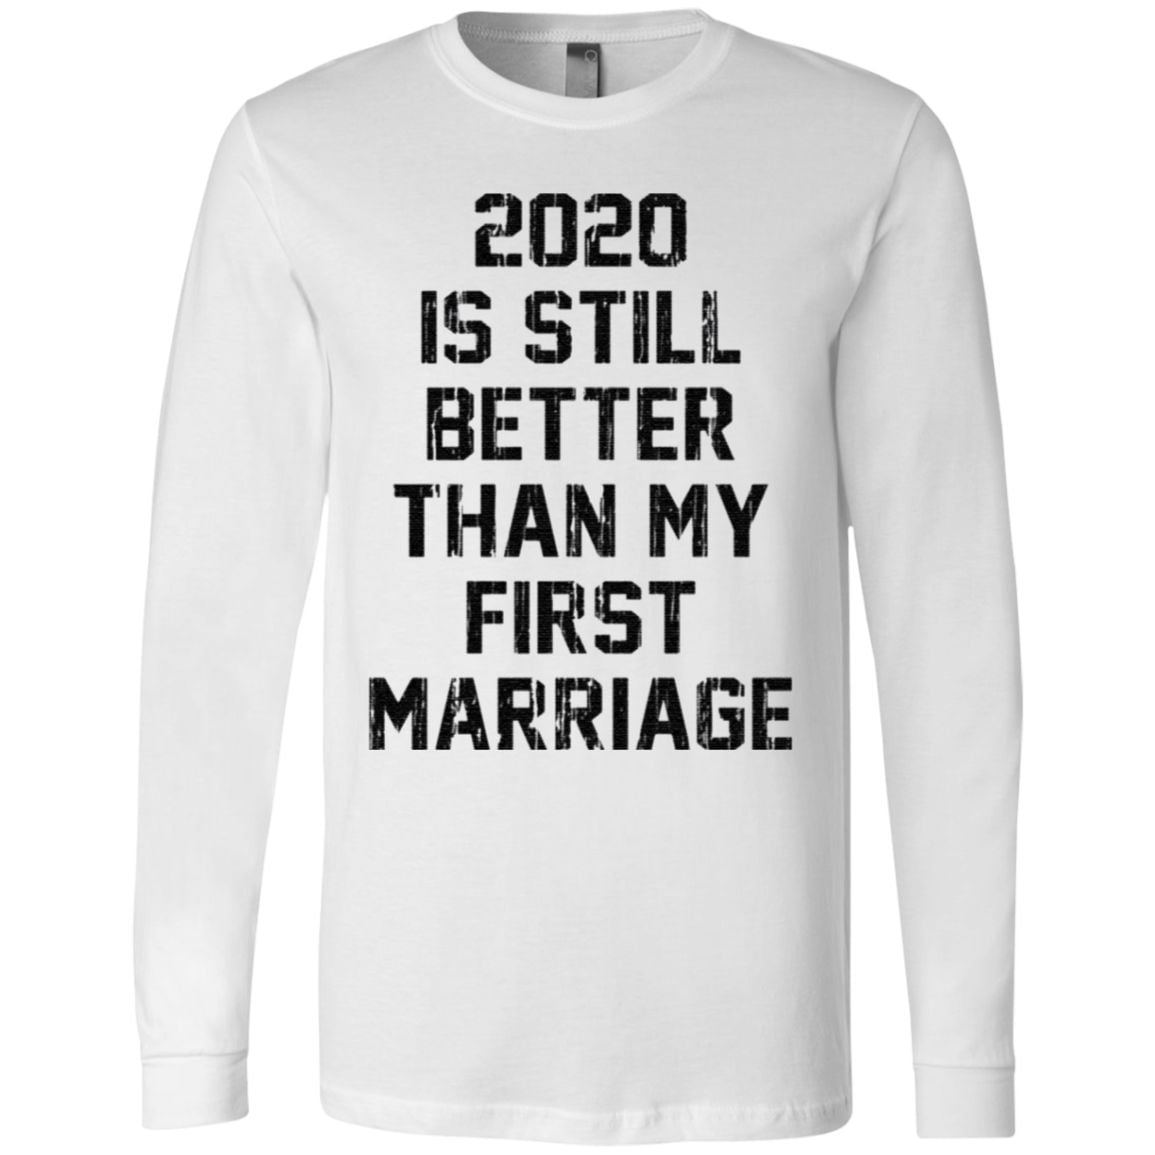 2020 is still better than my first marriage t shirt